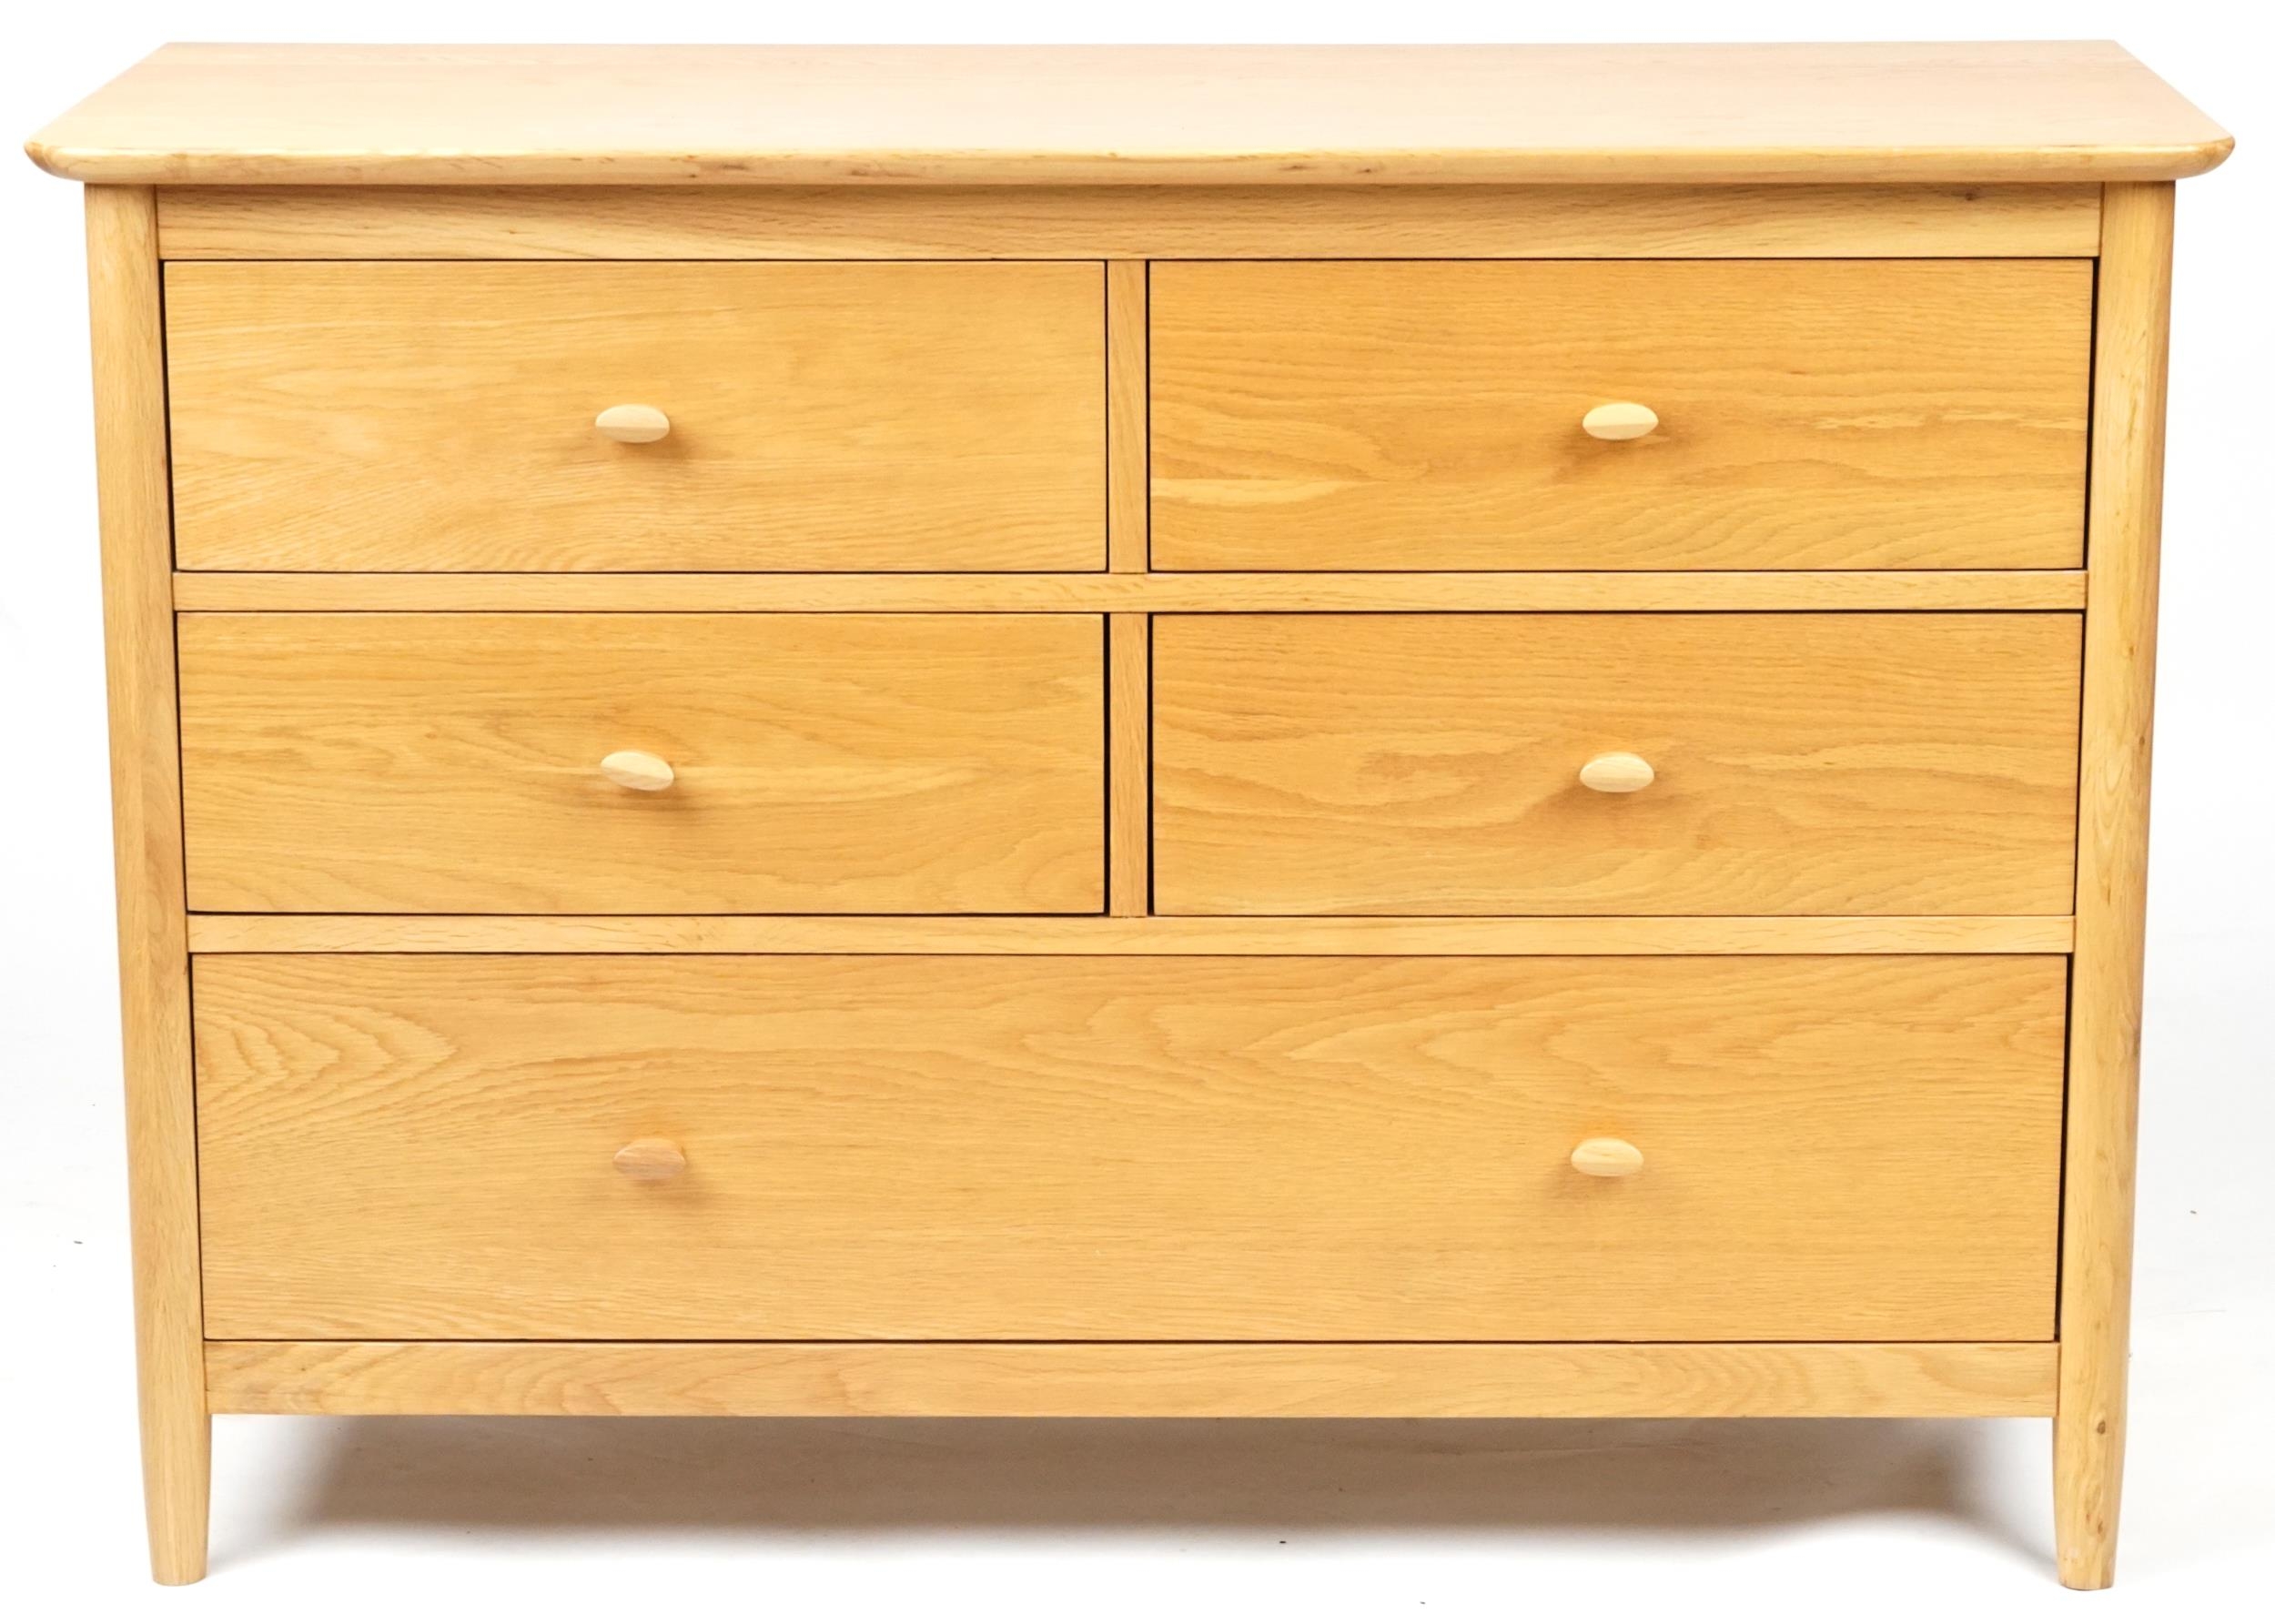 Ercol Teramo contemporary light oak five drawer chest, 79cm H x 114cm W x 47cm D - Image 2 of 6